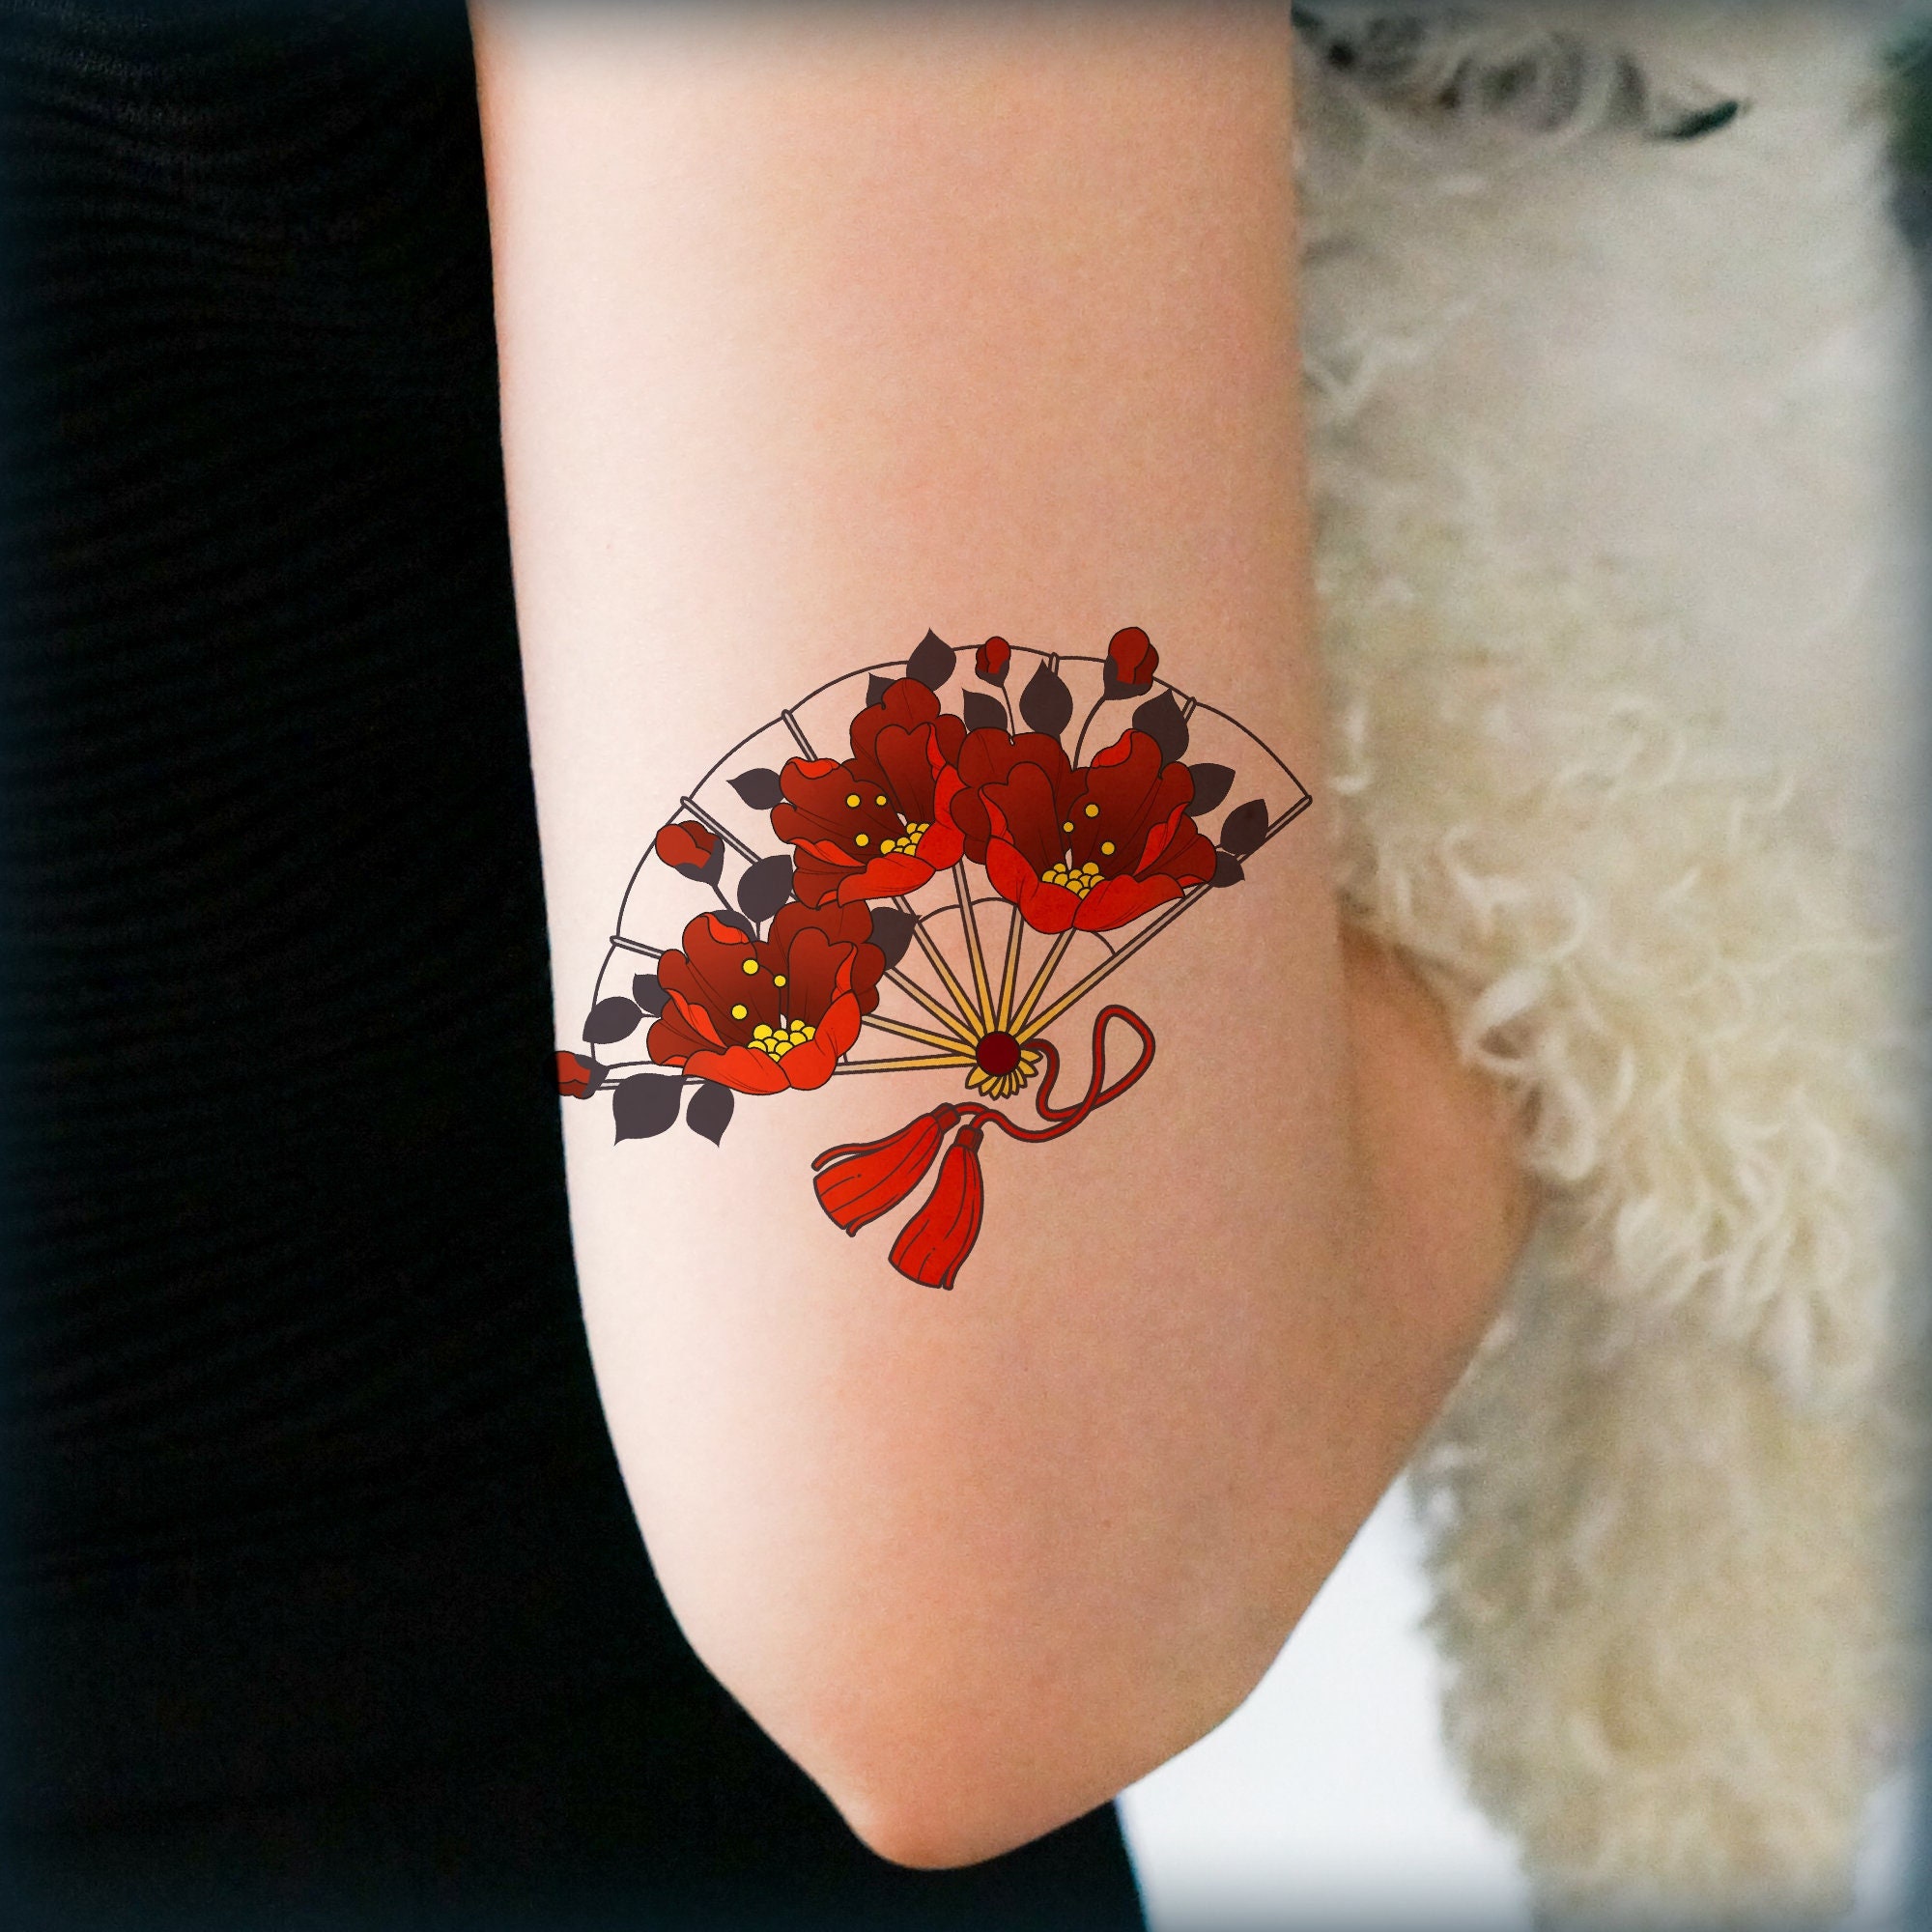 Fan Tattoo Symbol Of Royalty Gracefulness Culture And Femininity